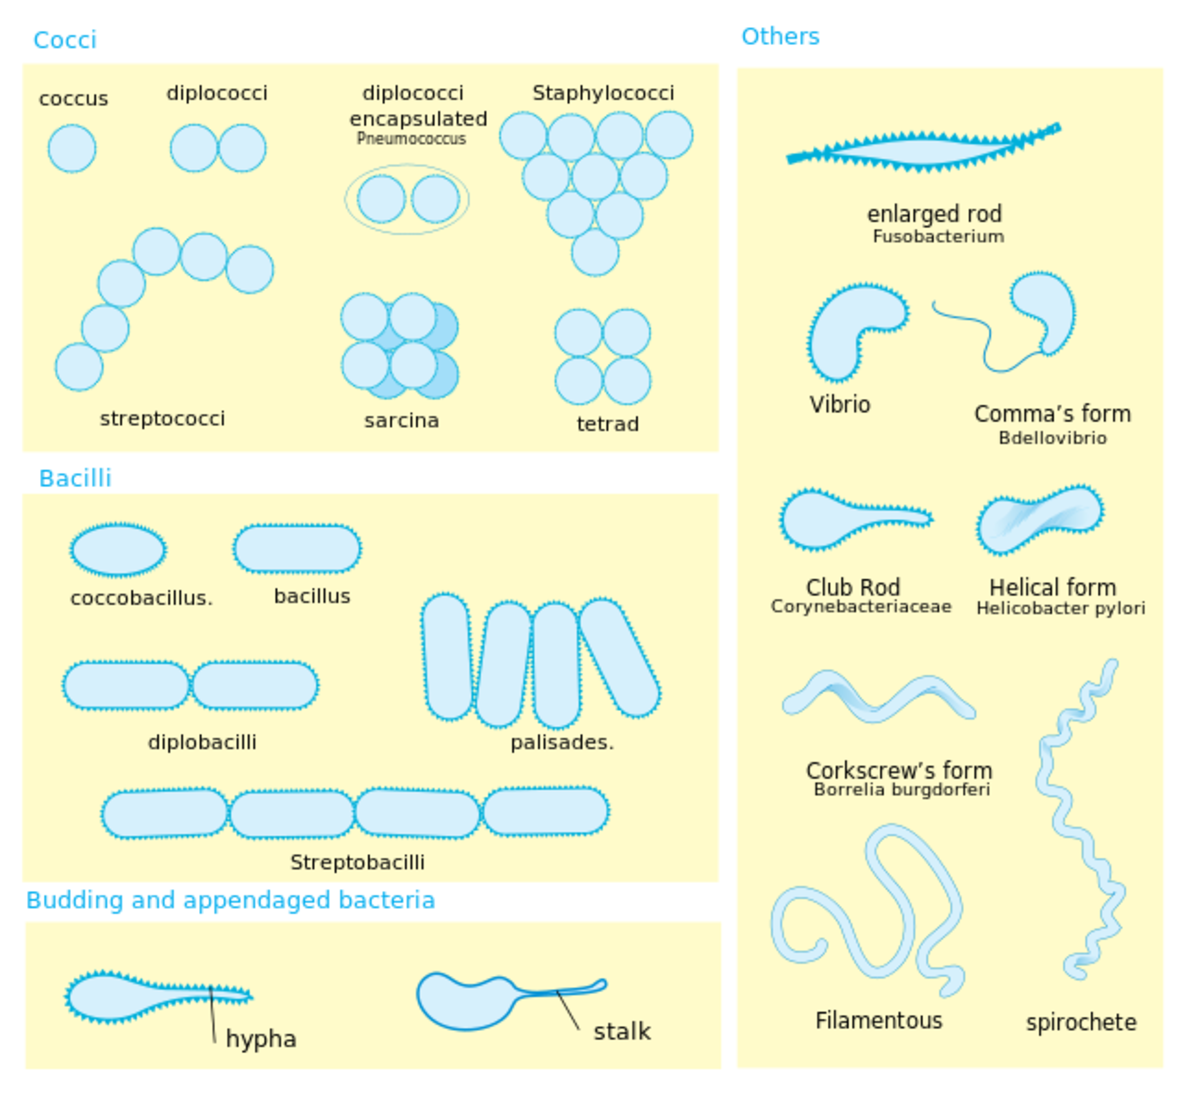 Bacteria have many shapes